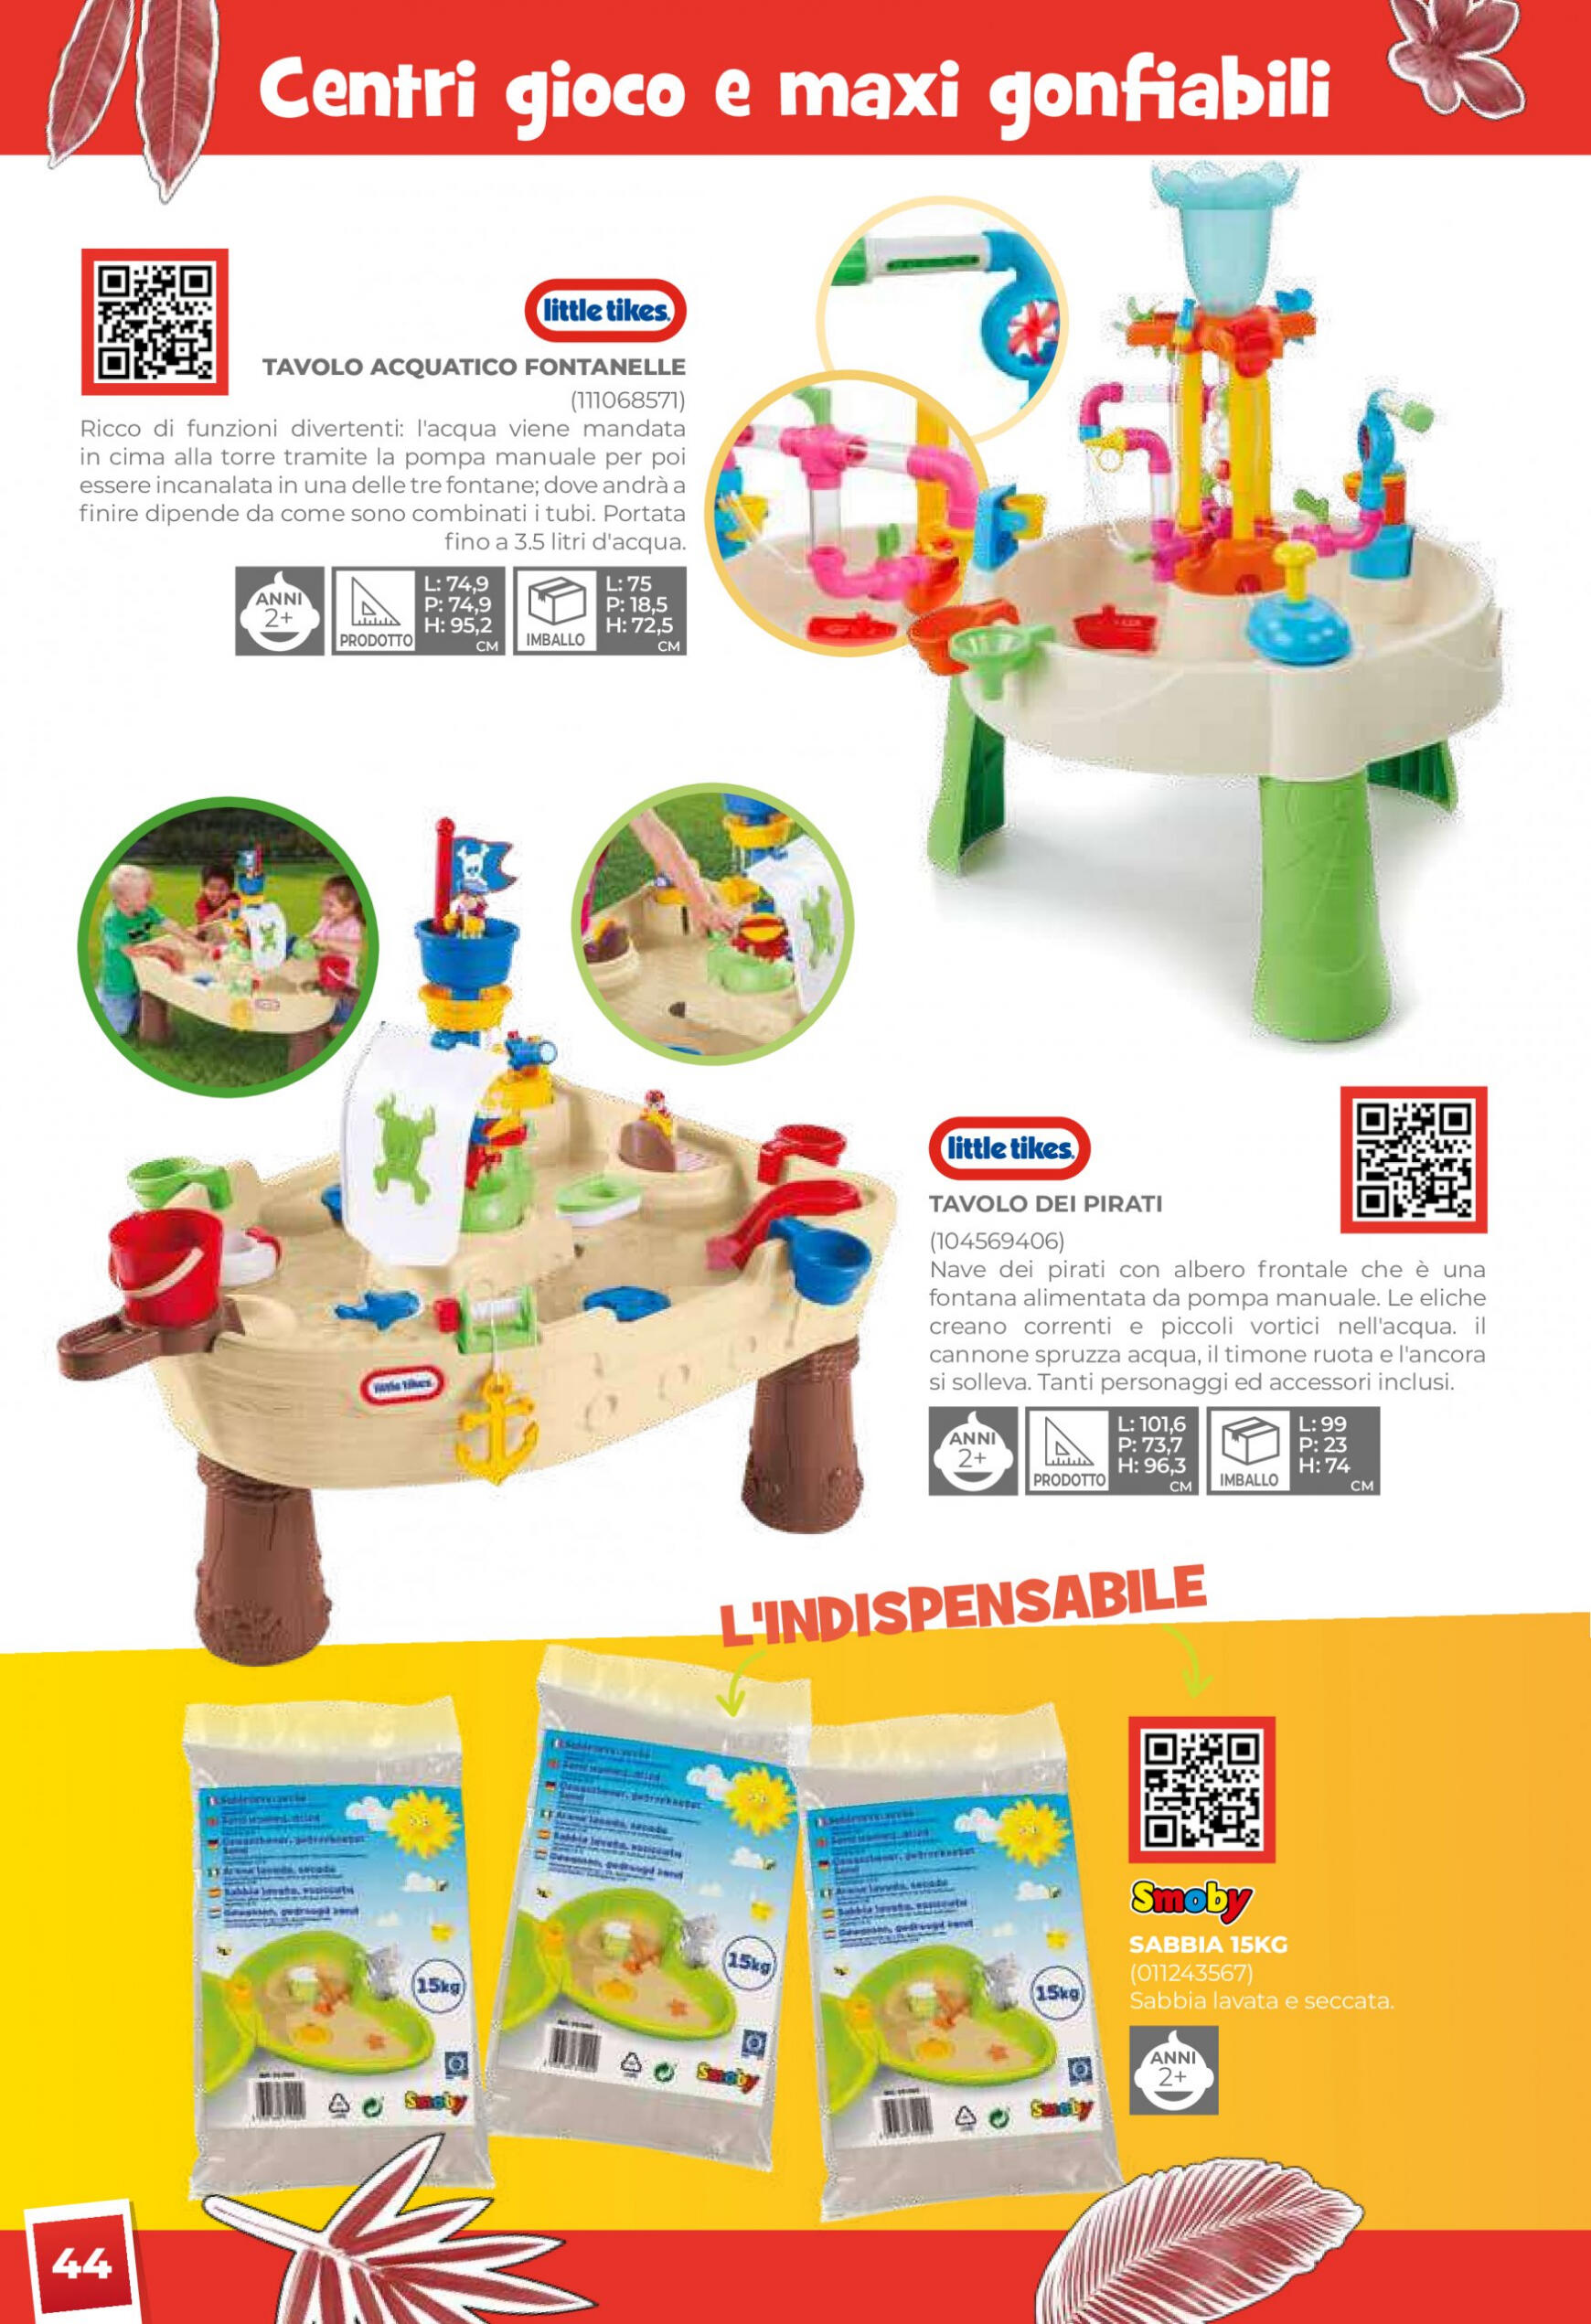 toys-center - Nuovo volantino Toys Center 01.05. - 31.12. - page: 46